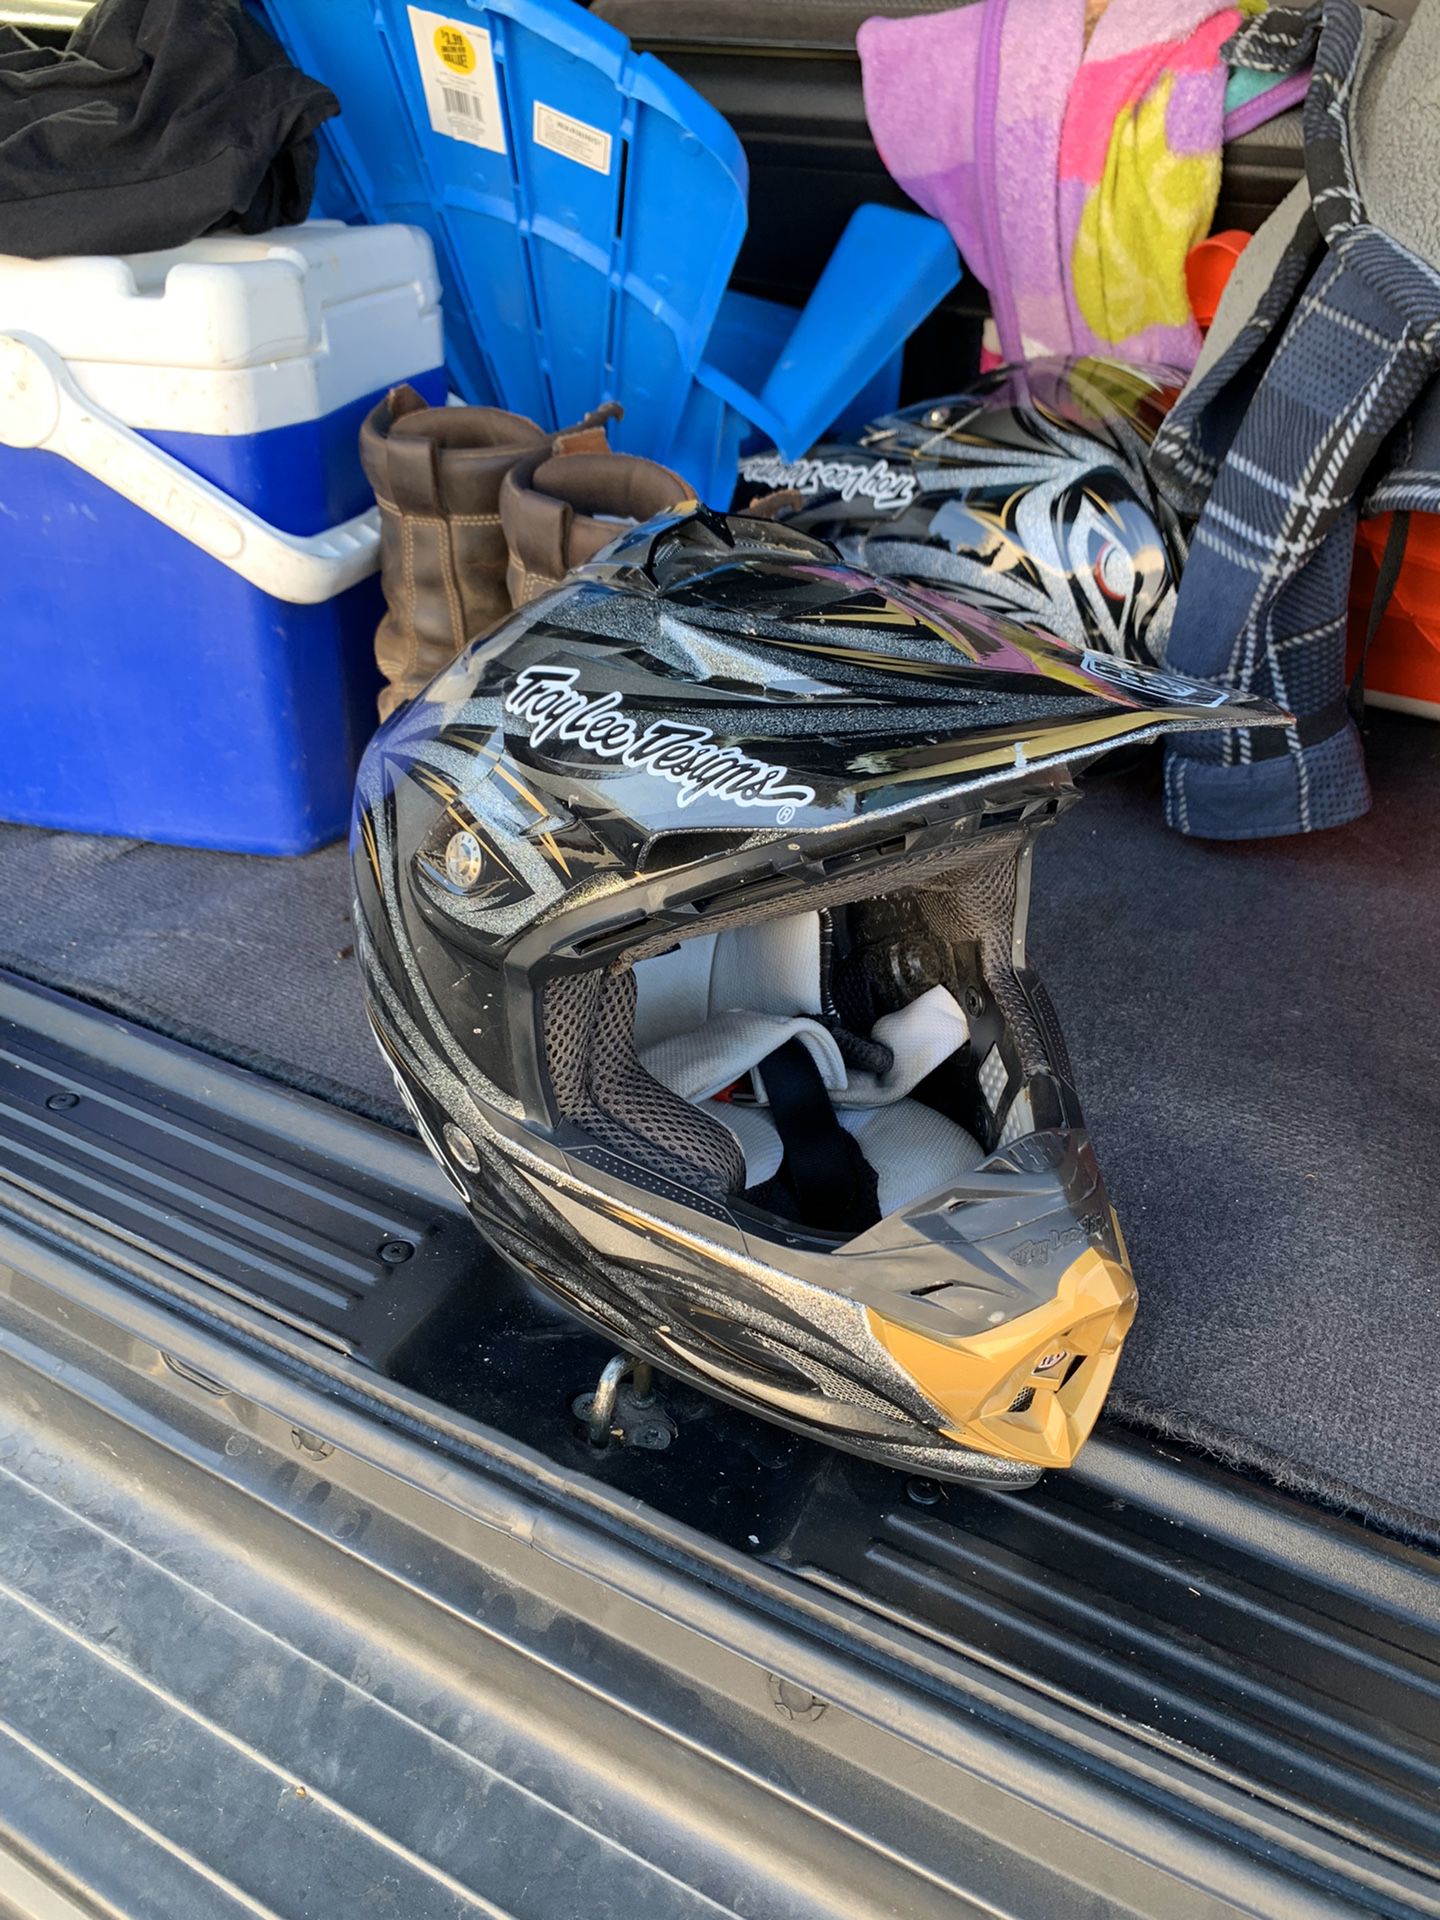 Troy lee design dirt bike helmet $100 or better offer